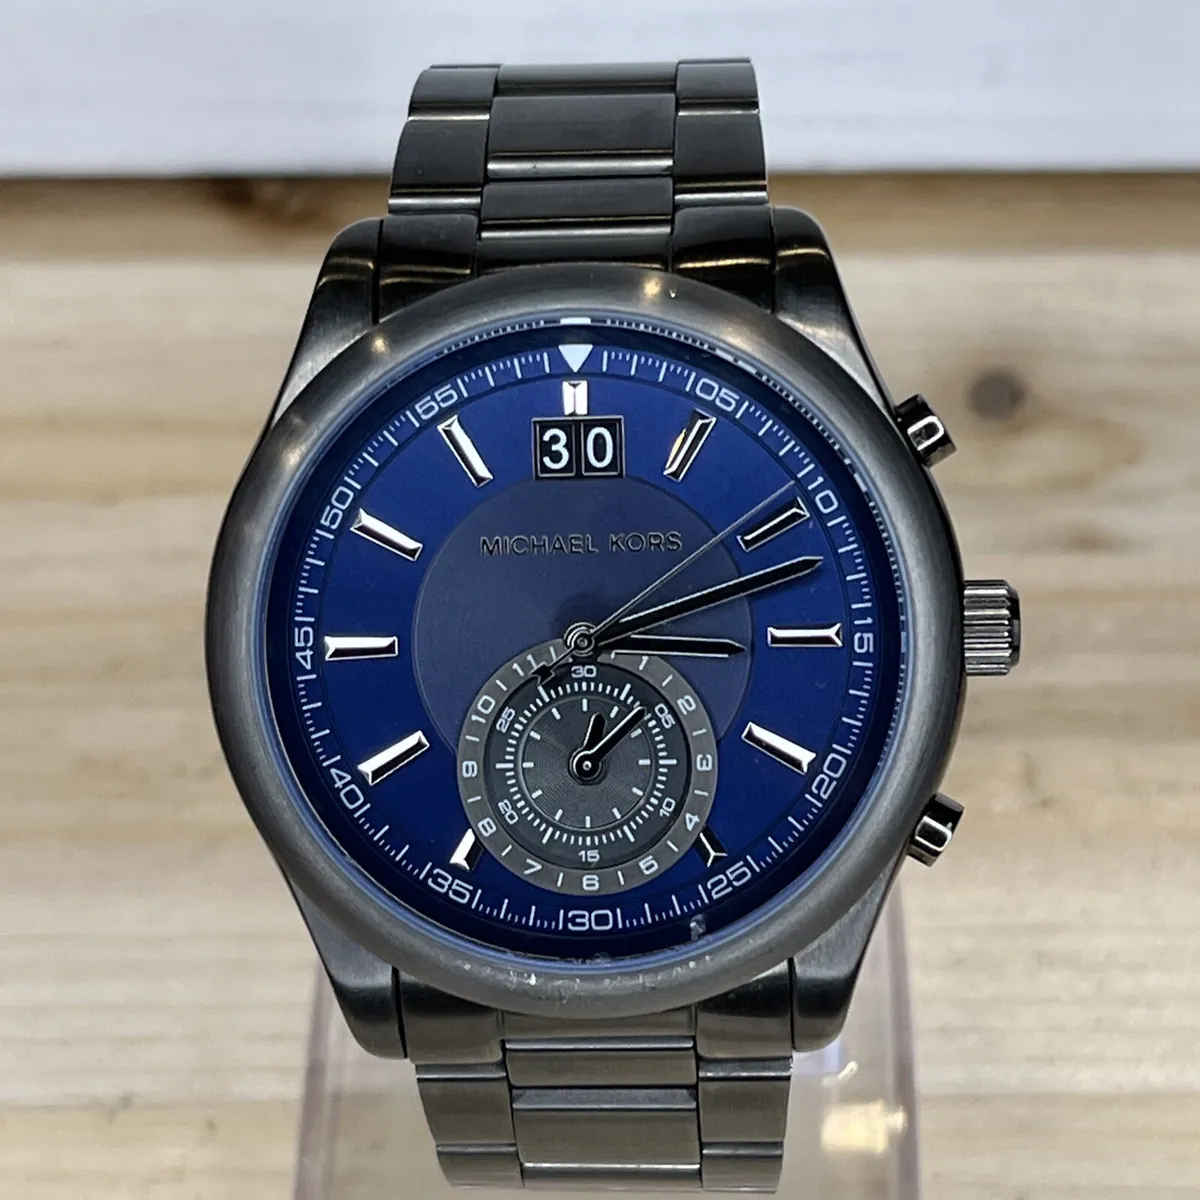 Montre chronographe homme Michael Kors MK8418 cadran bleu ton métal acier